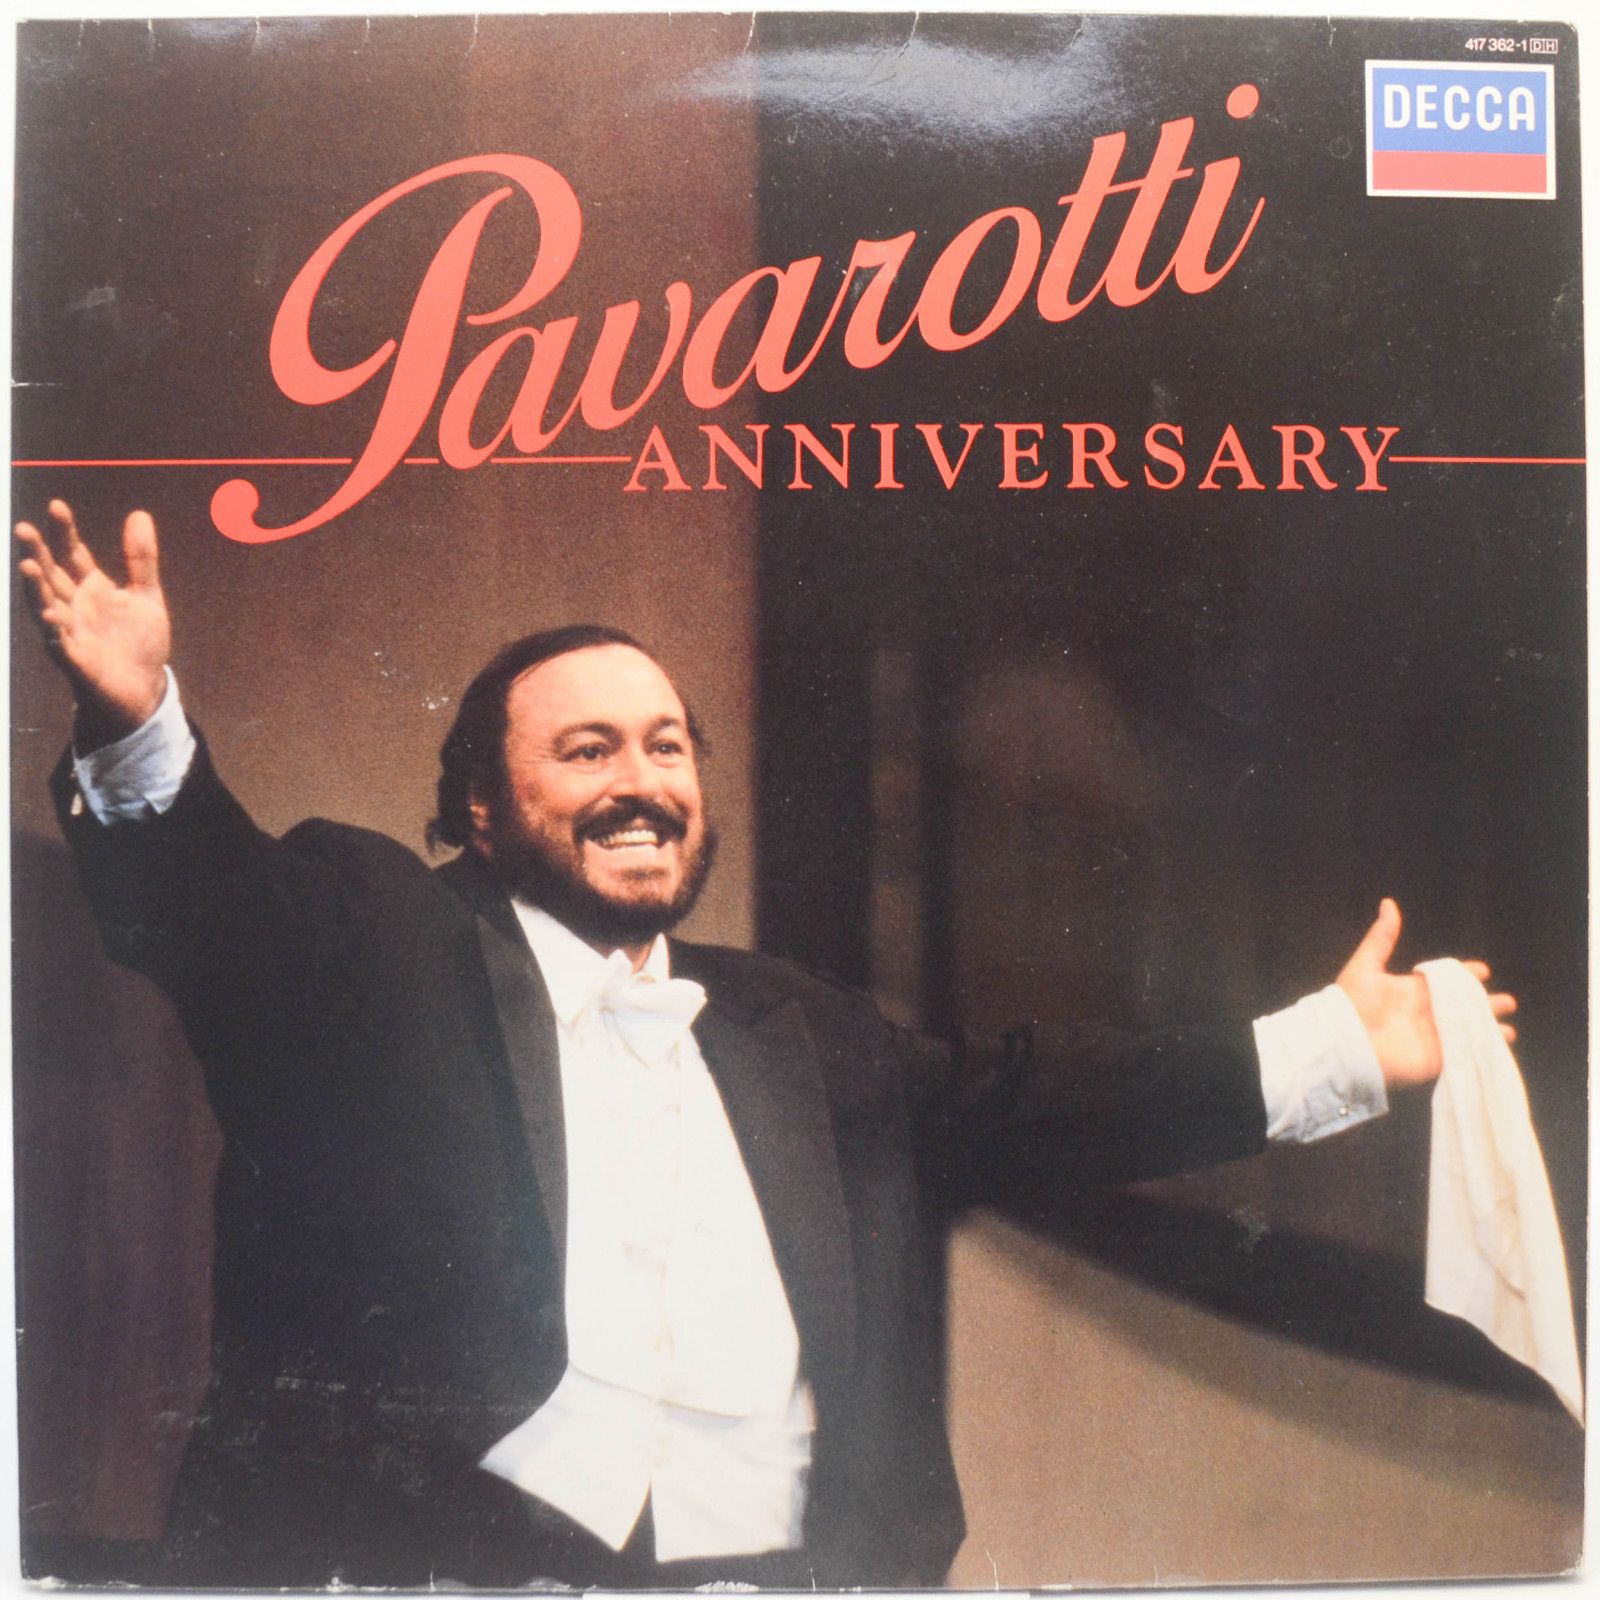 Pavarotti — Anniversary (booklet), 1986